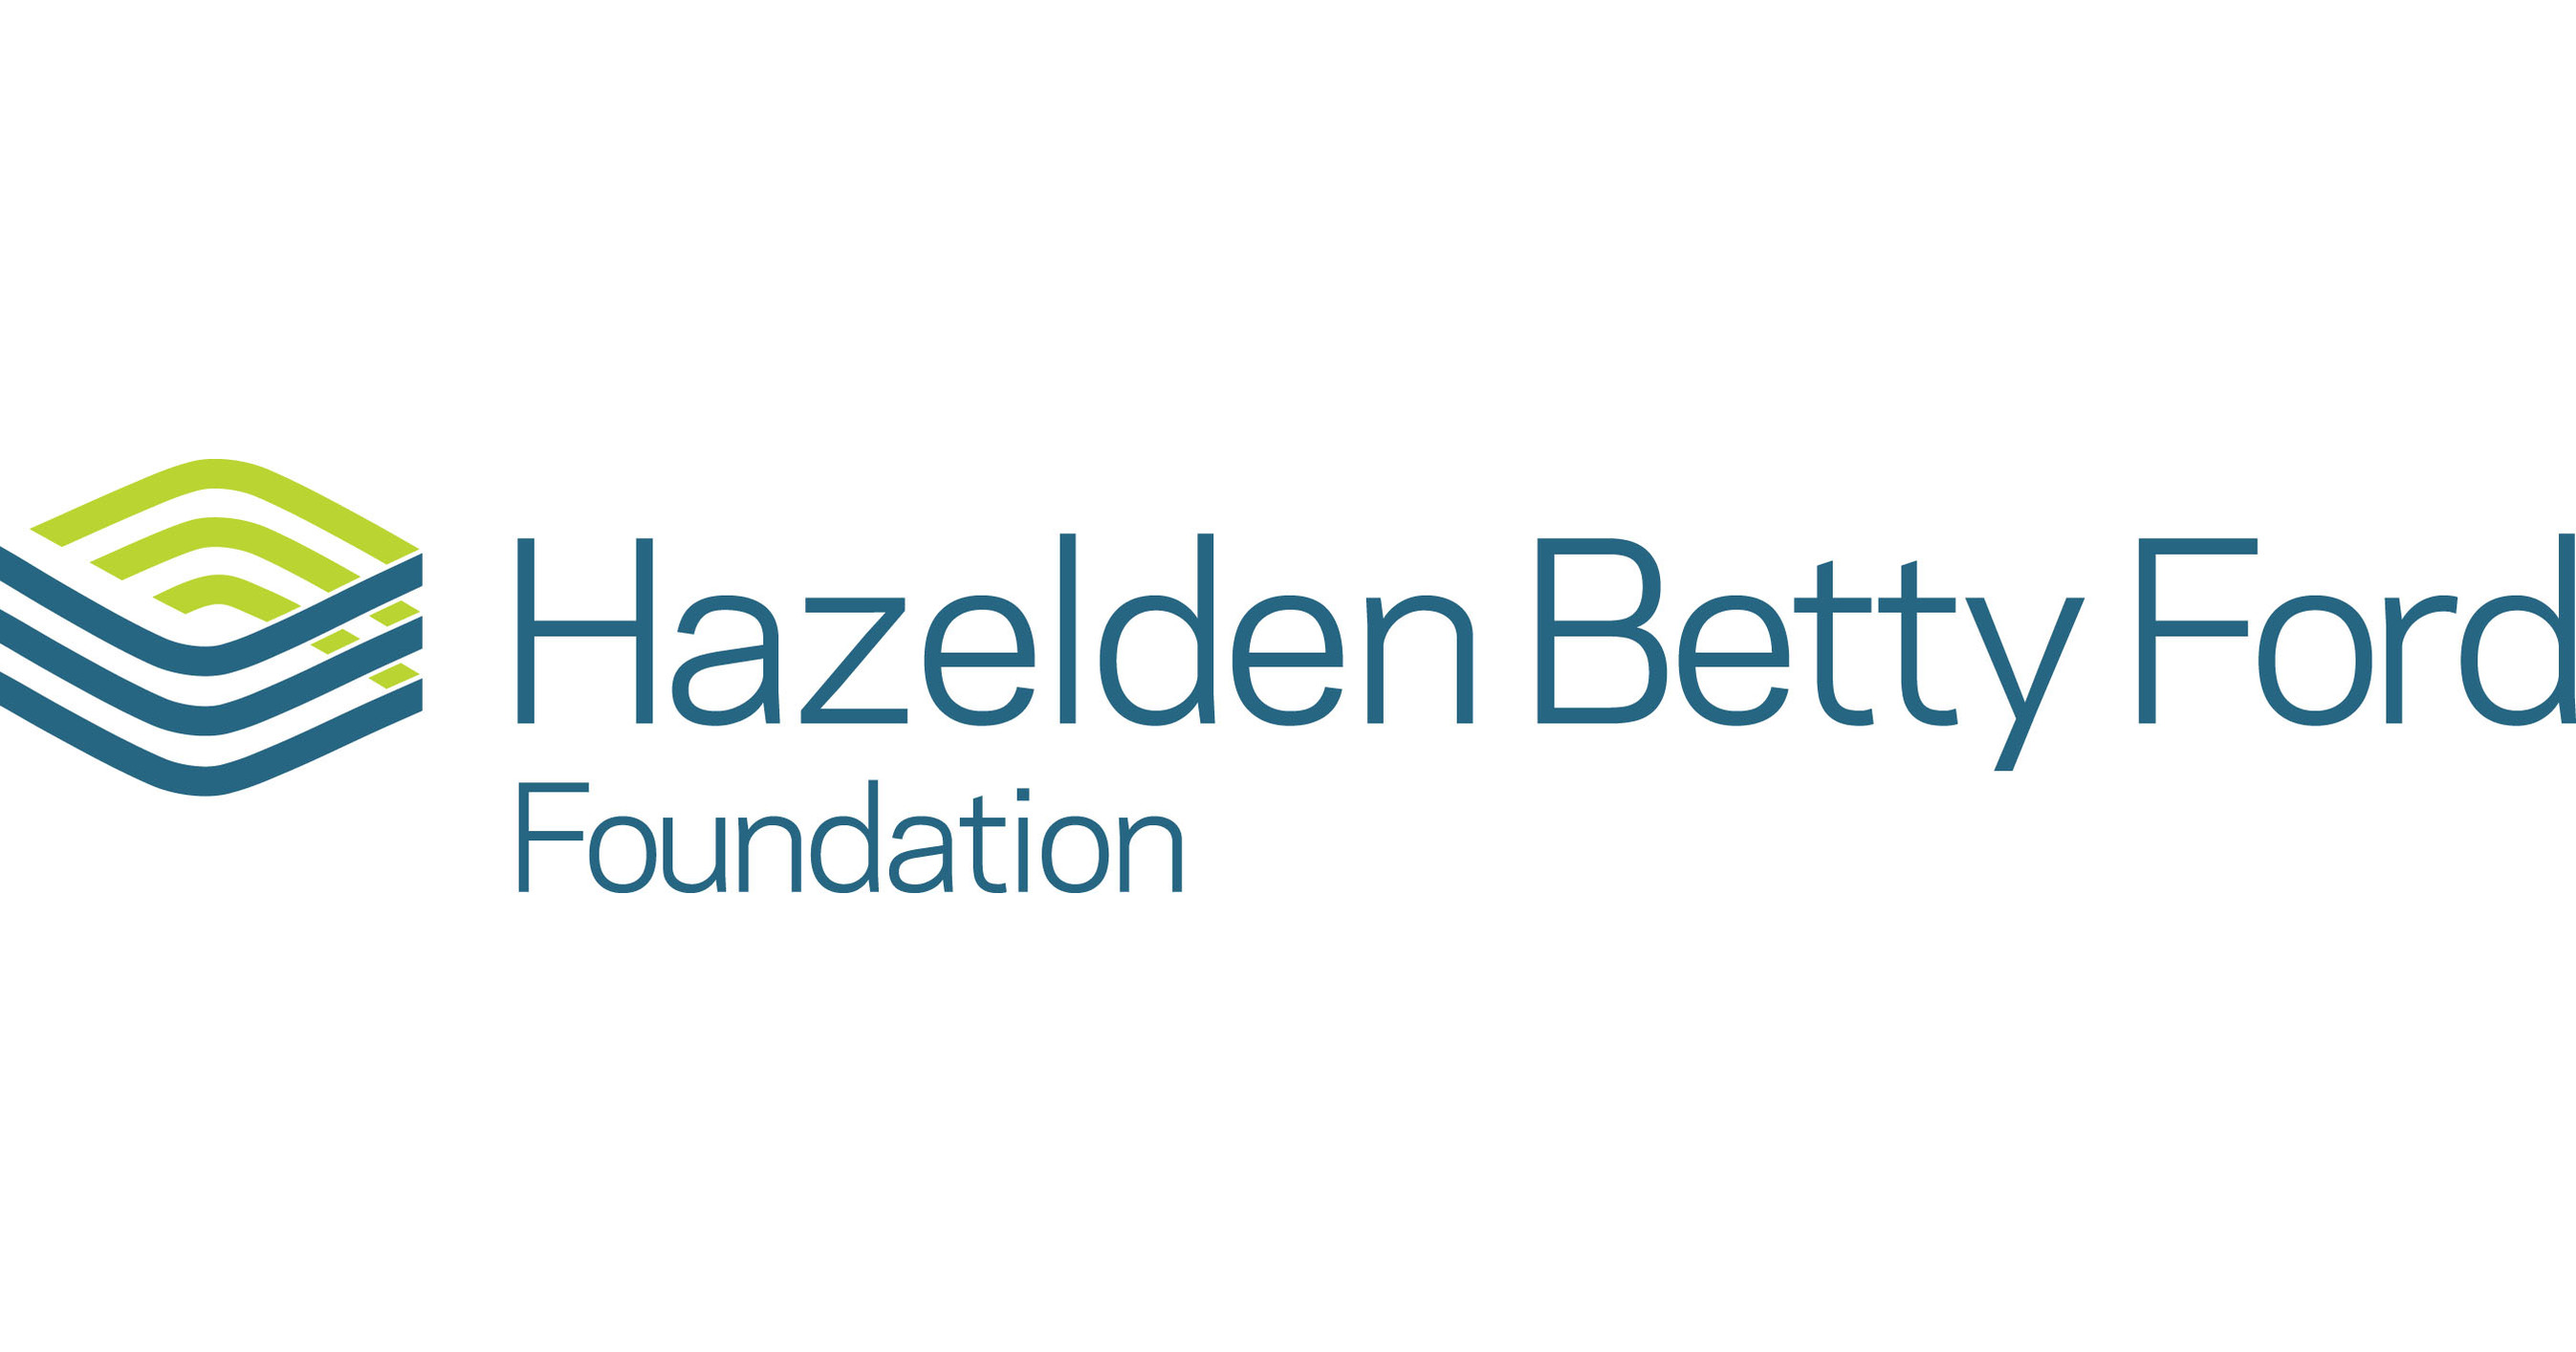 Hazelden Betty Ford Foundation Launches Patient Care Network, Announces